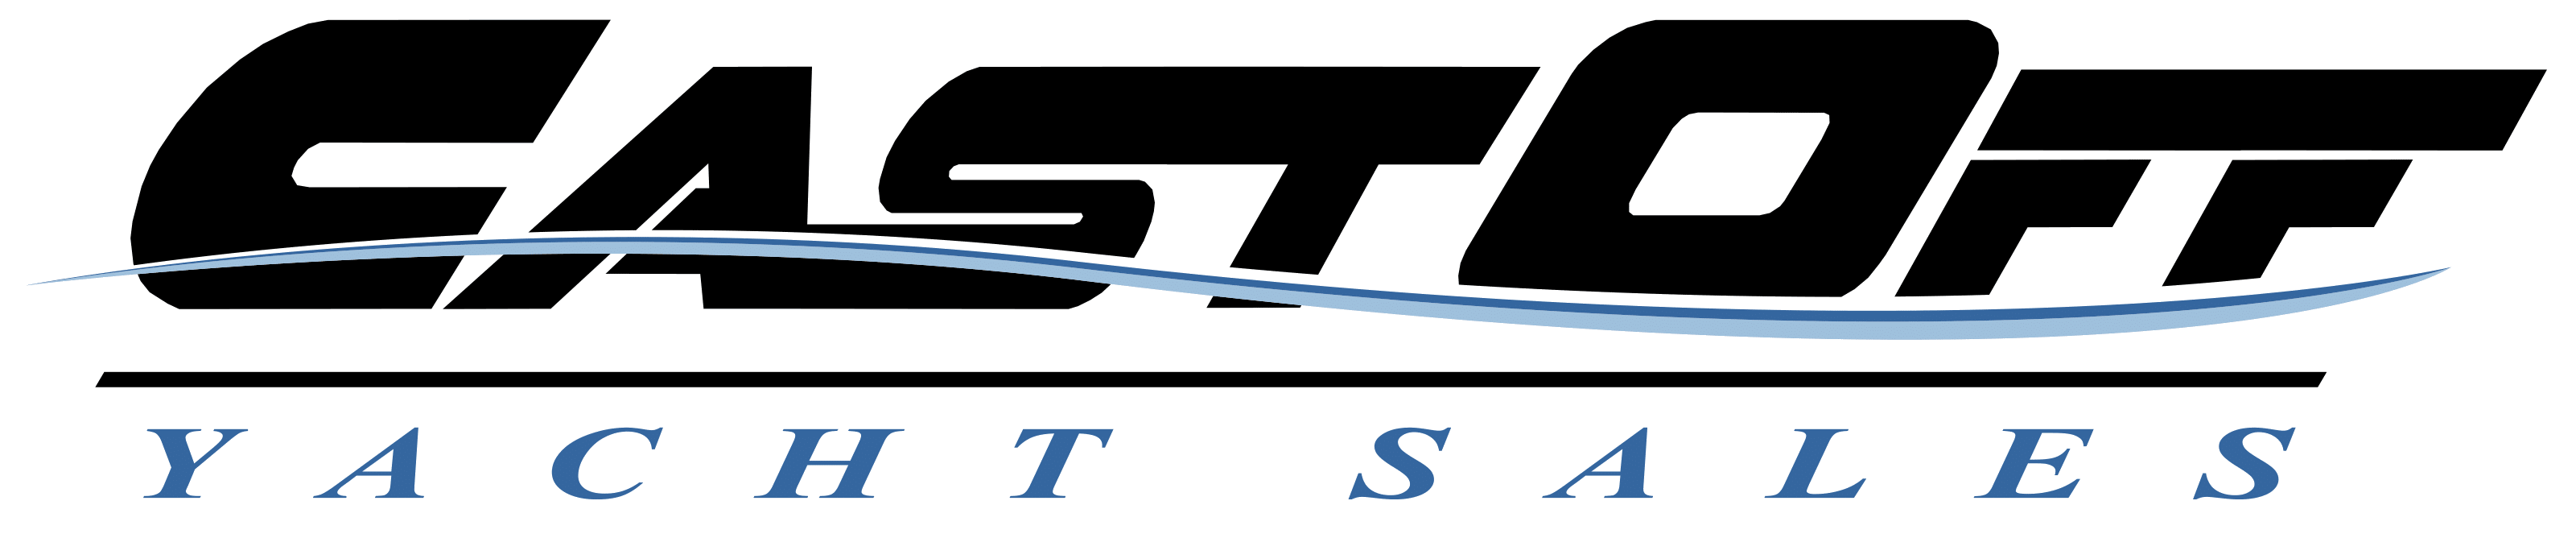 castoffyachtsales.com logo